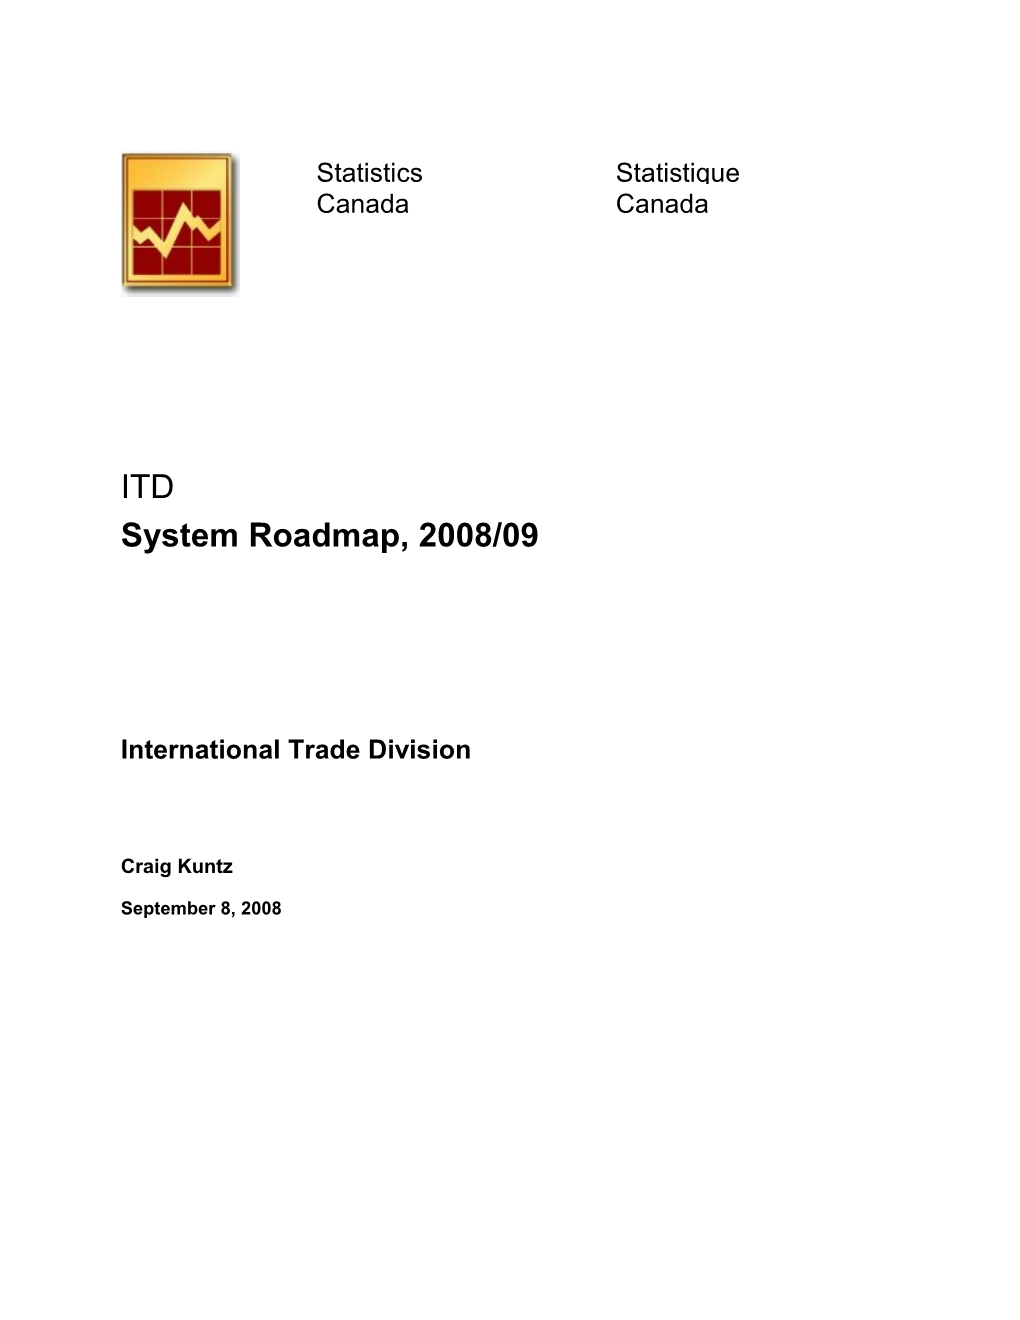 System Roadmap, 2008/09